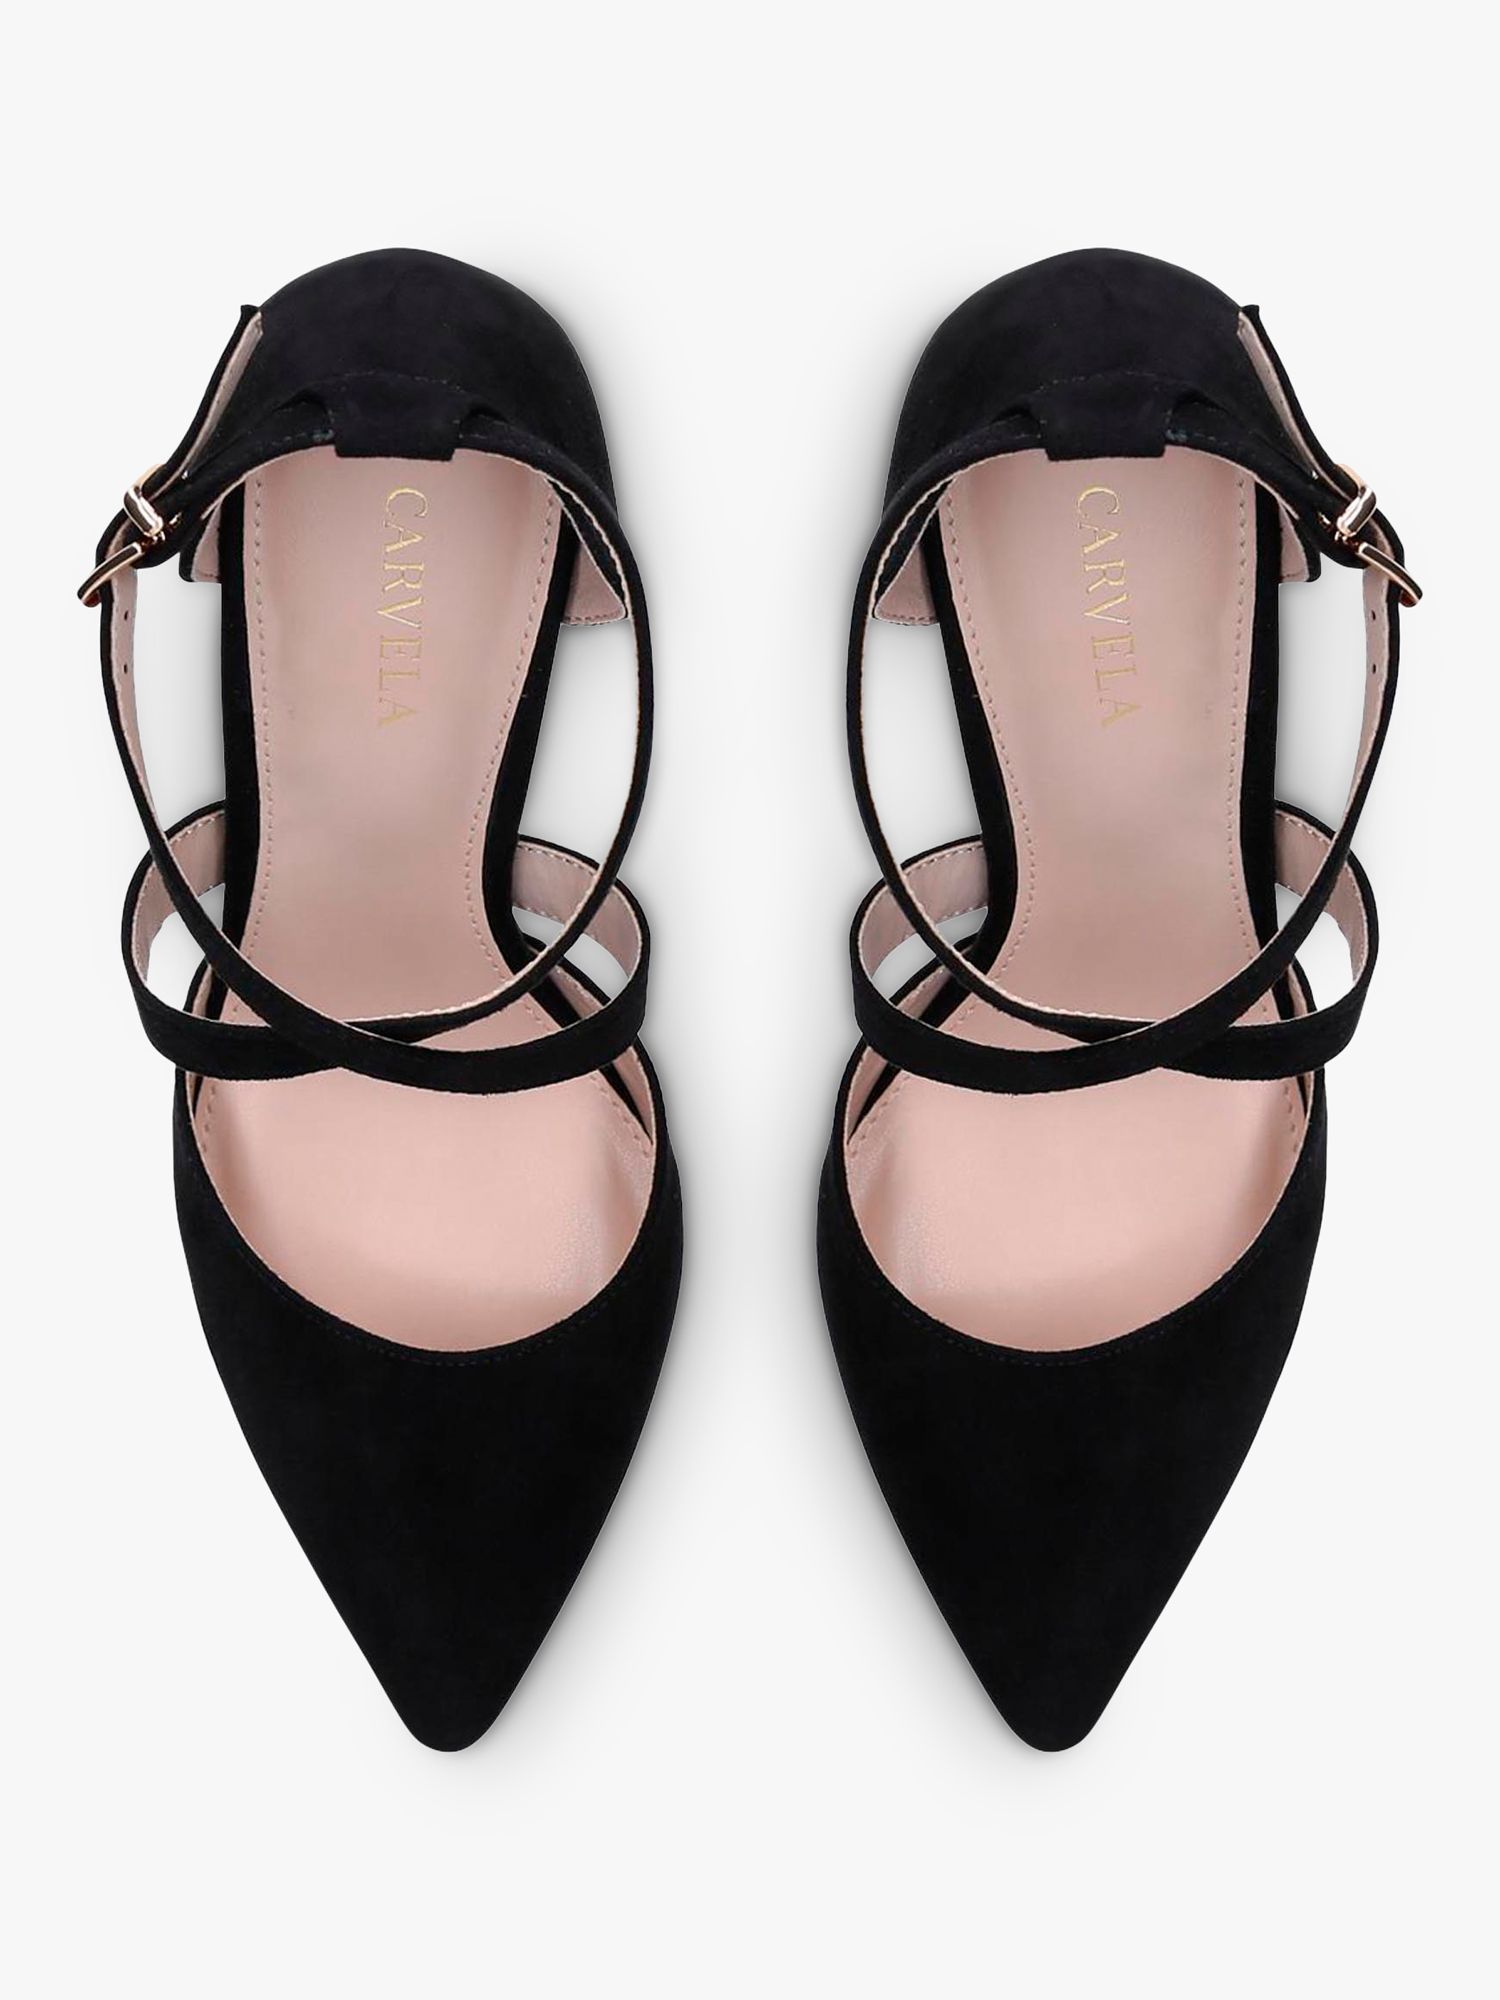 Carvela Kross Stiletto Heel Court Shoes, Black at John Lewis & Partners